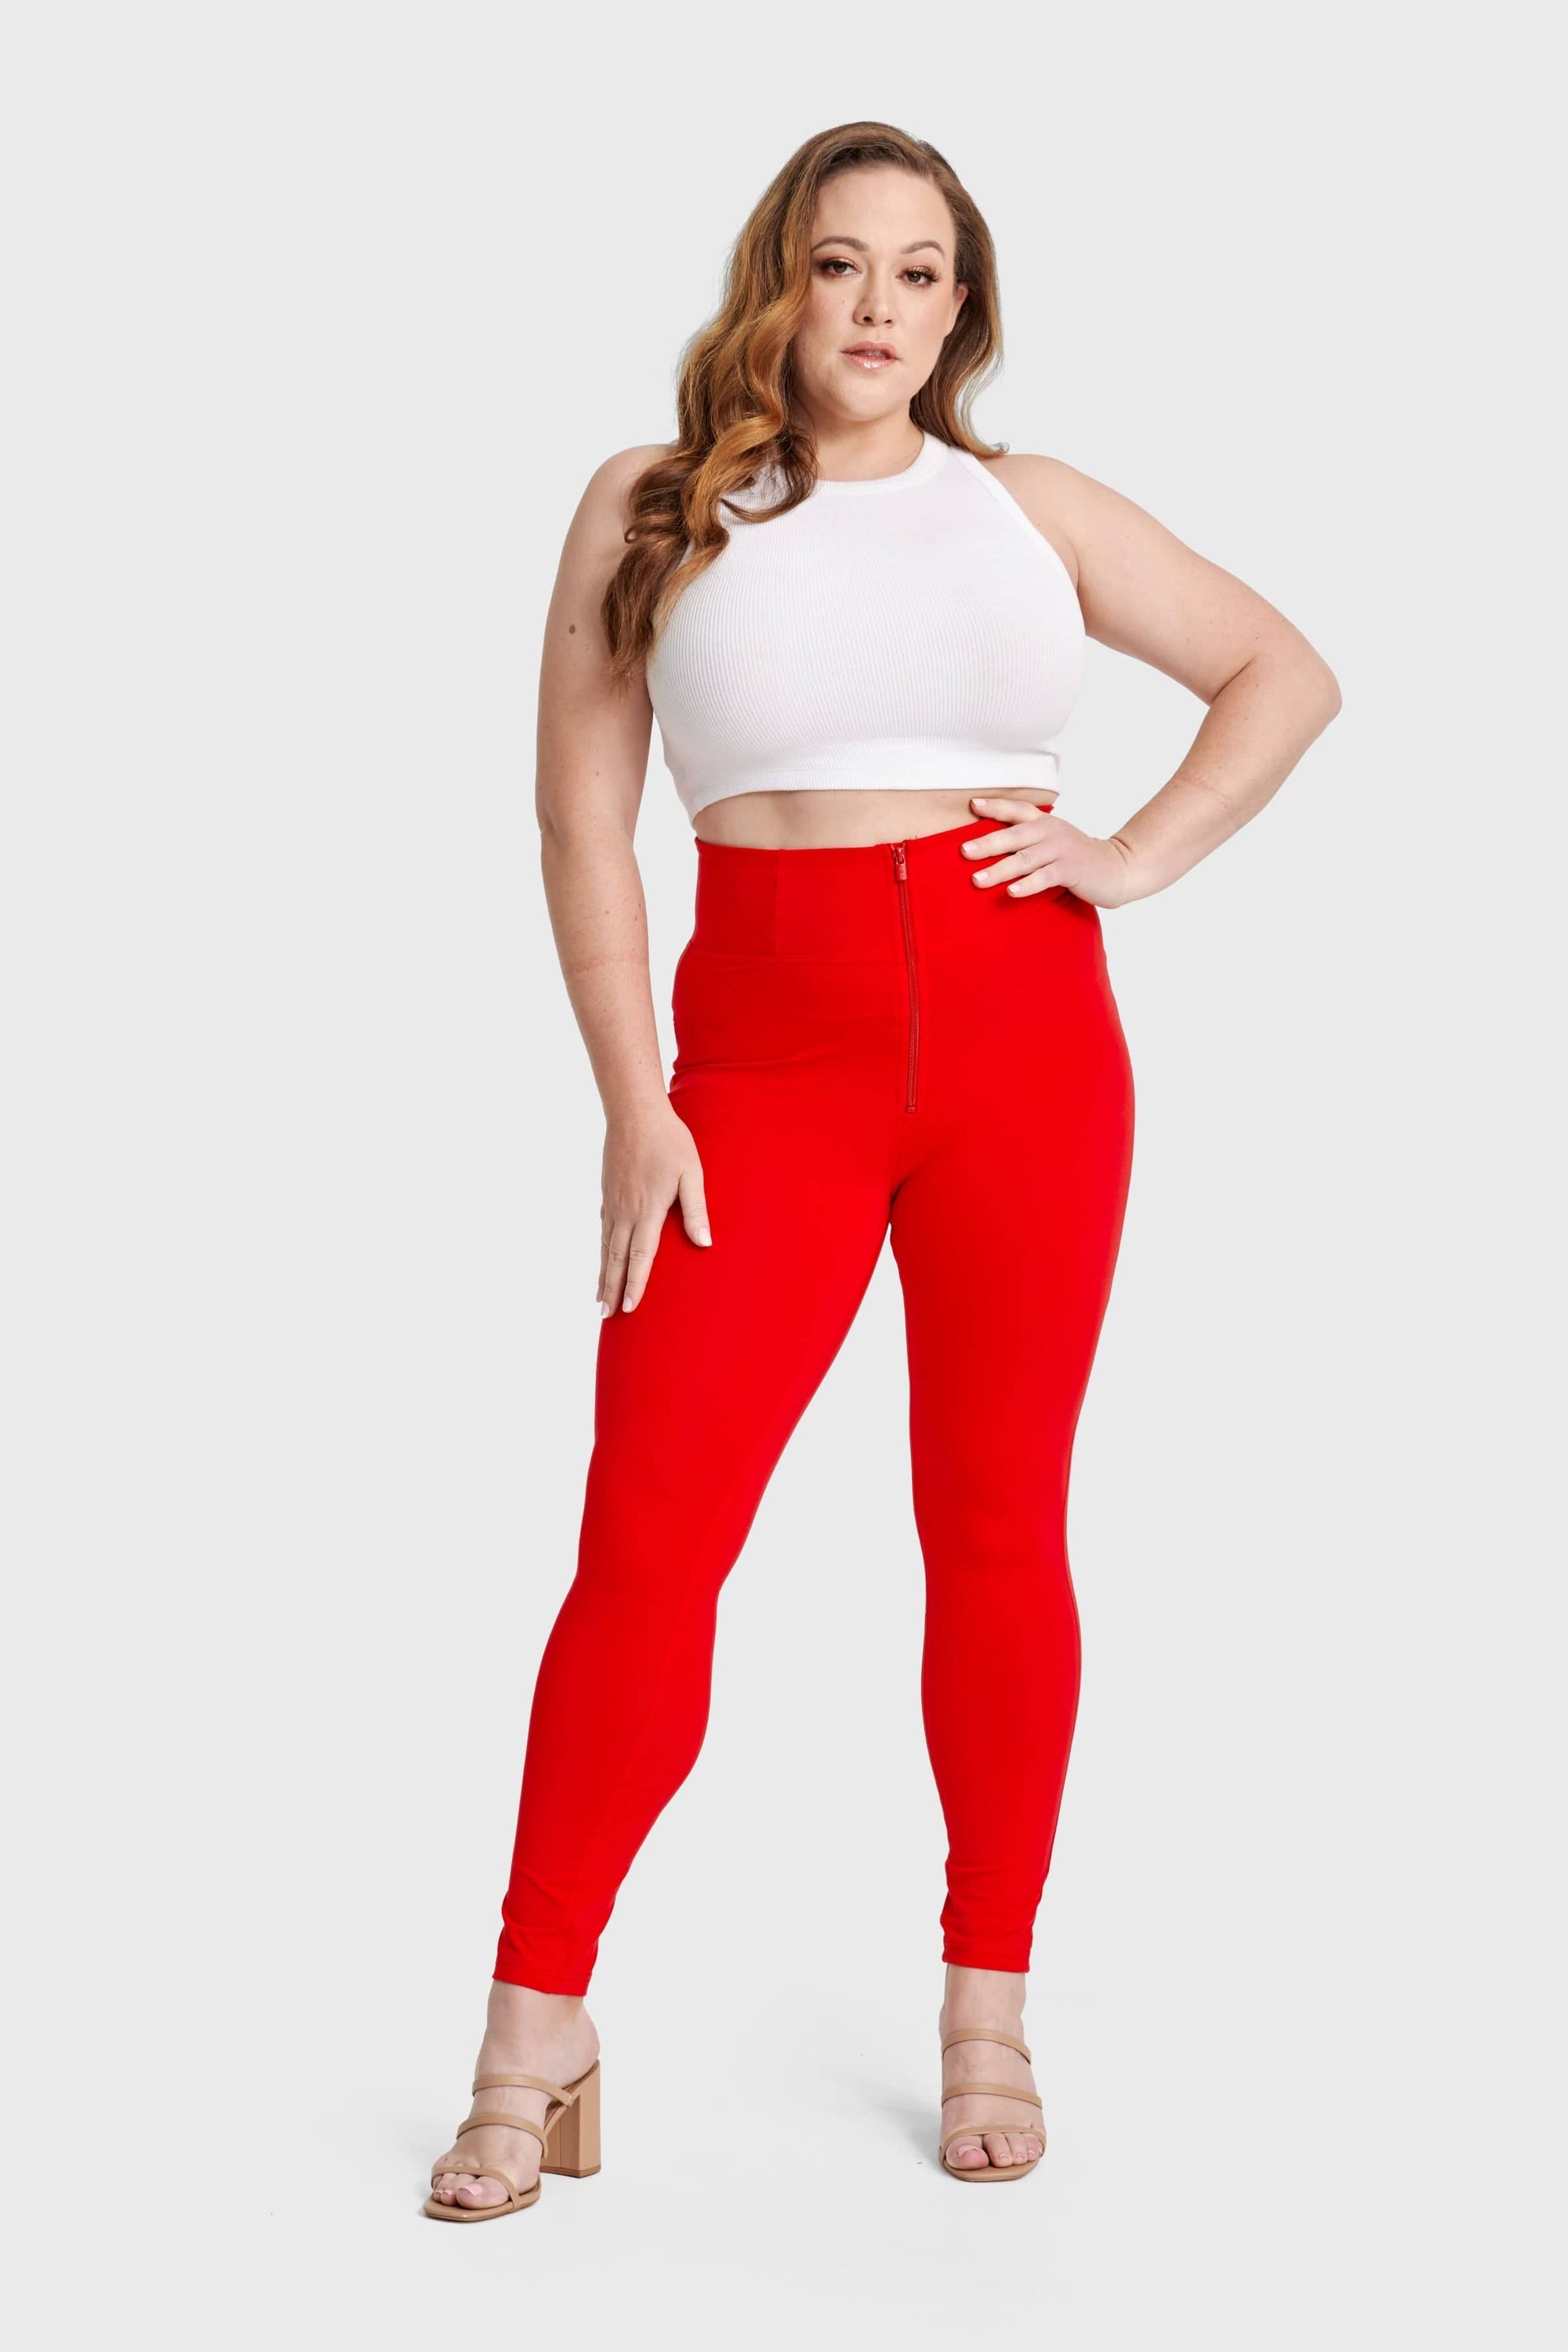 WR.UP® Curvy Fashion - Cintura alta con cremallera - Largo completo - Rojo 3